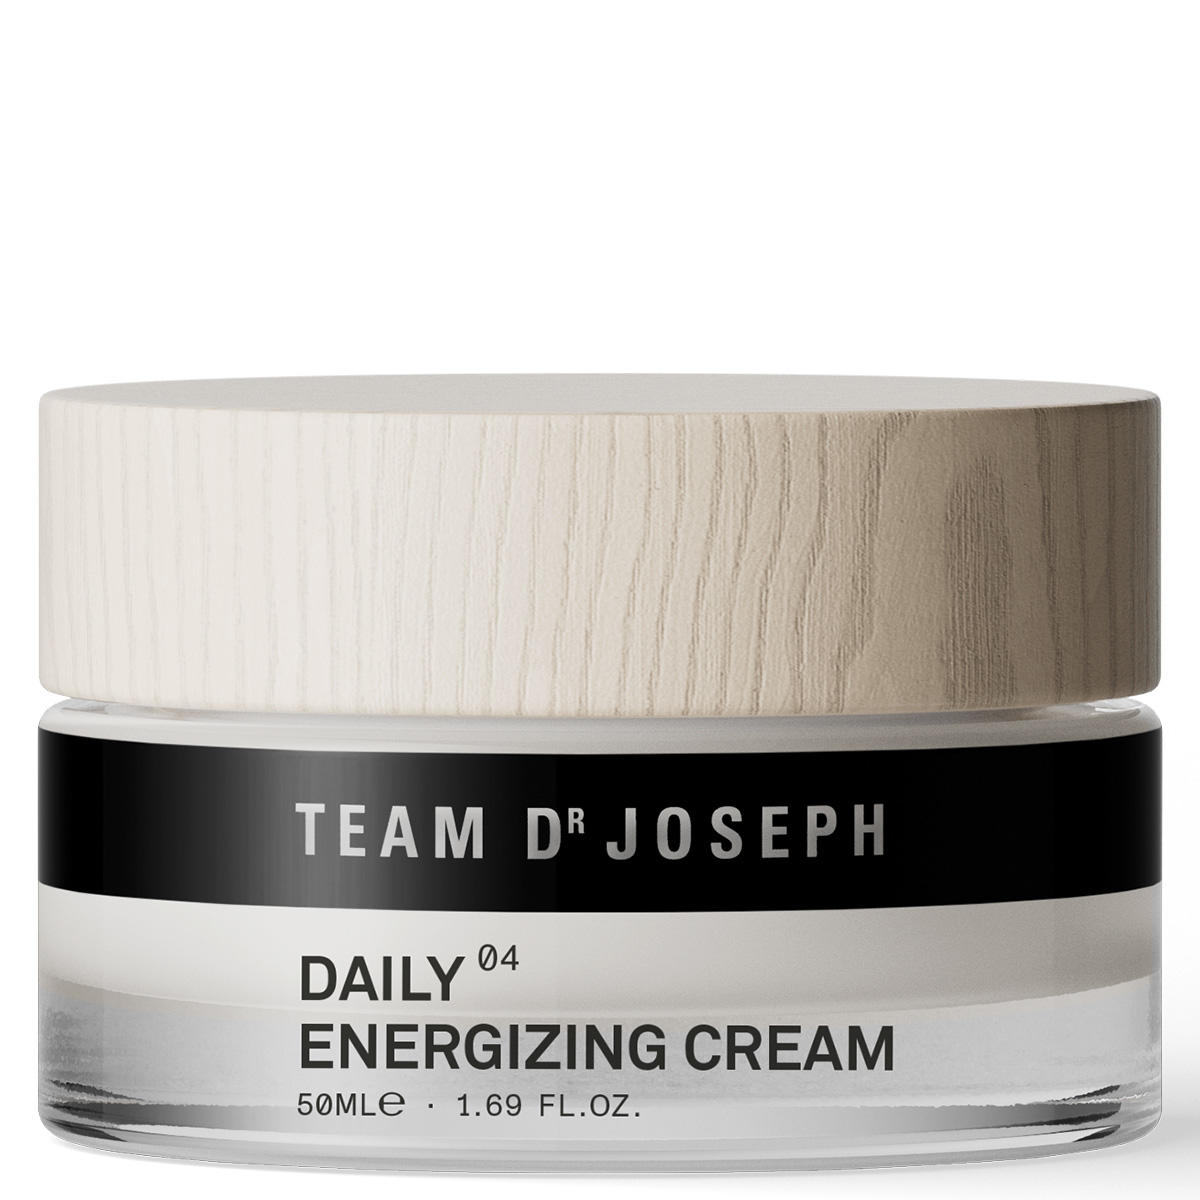 TEAM DR JOSEPH Daily Energizing Cream 50 ml